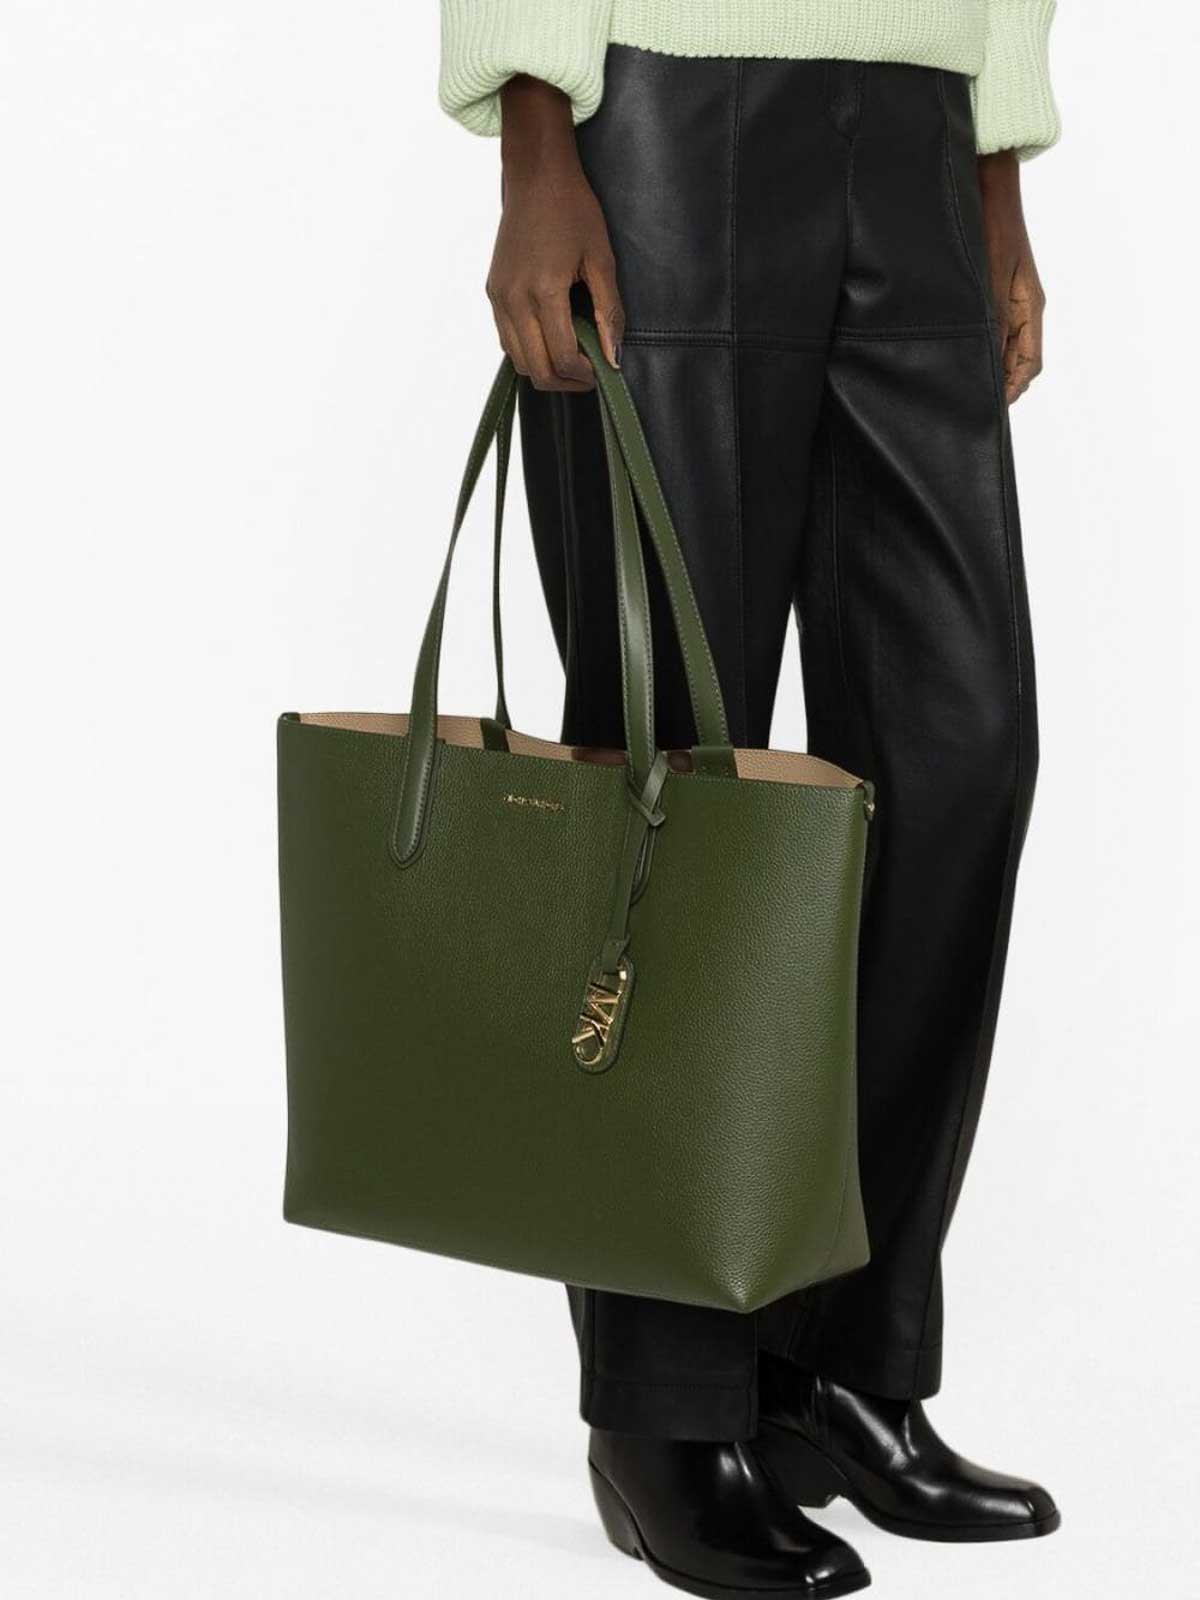 Michael Kors - Shopping Bag